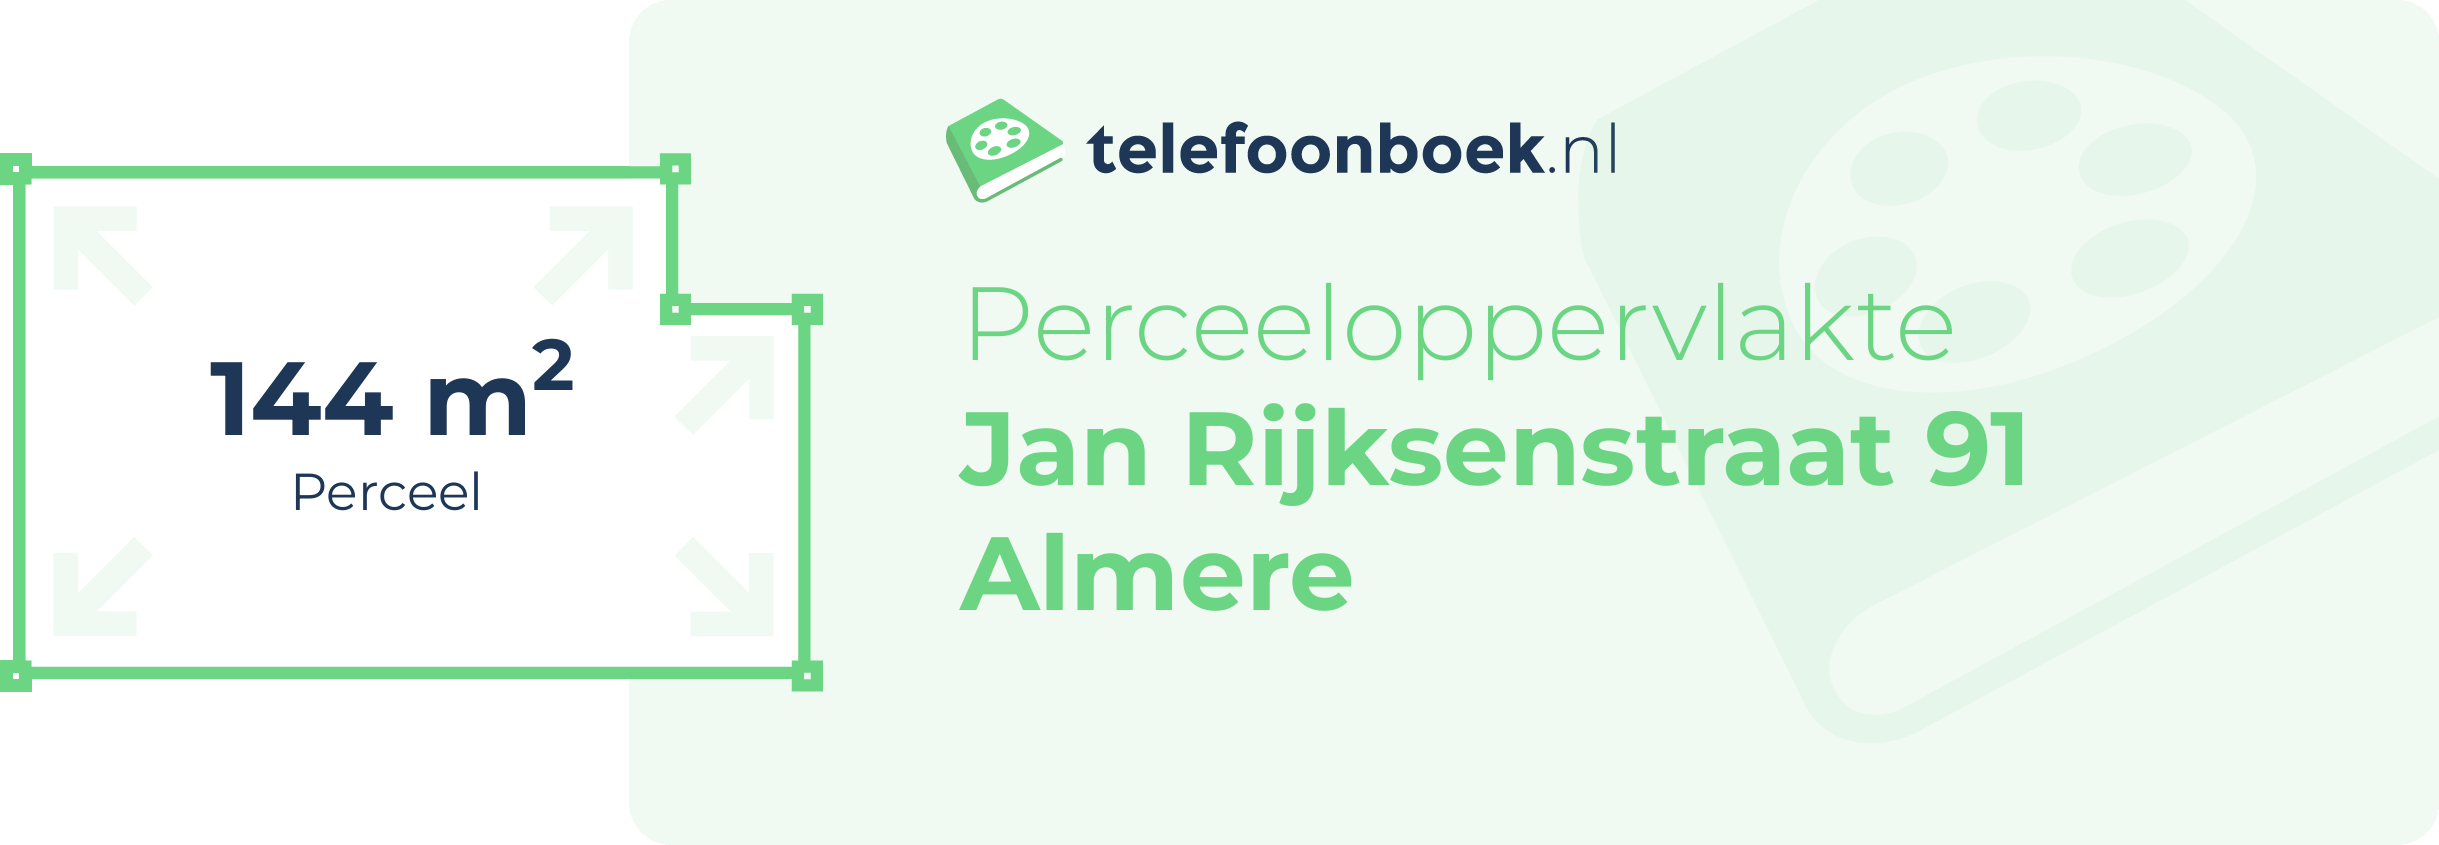 Perceeloppervlakte Jan Rijksenstraat 91 Almere